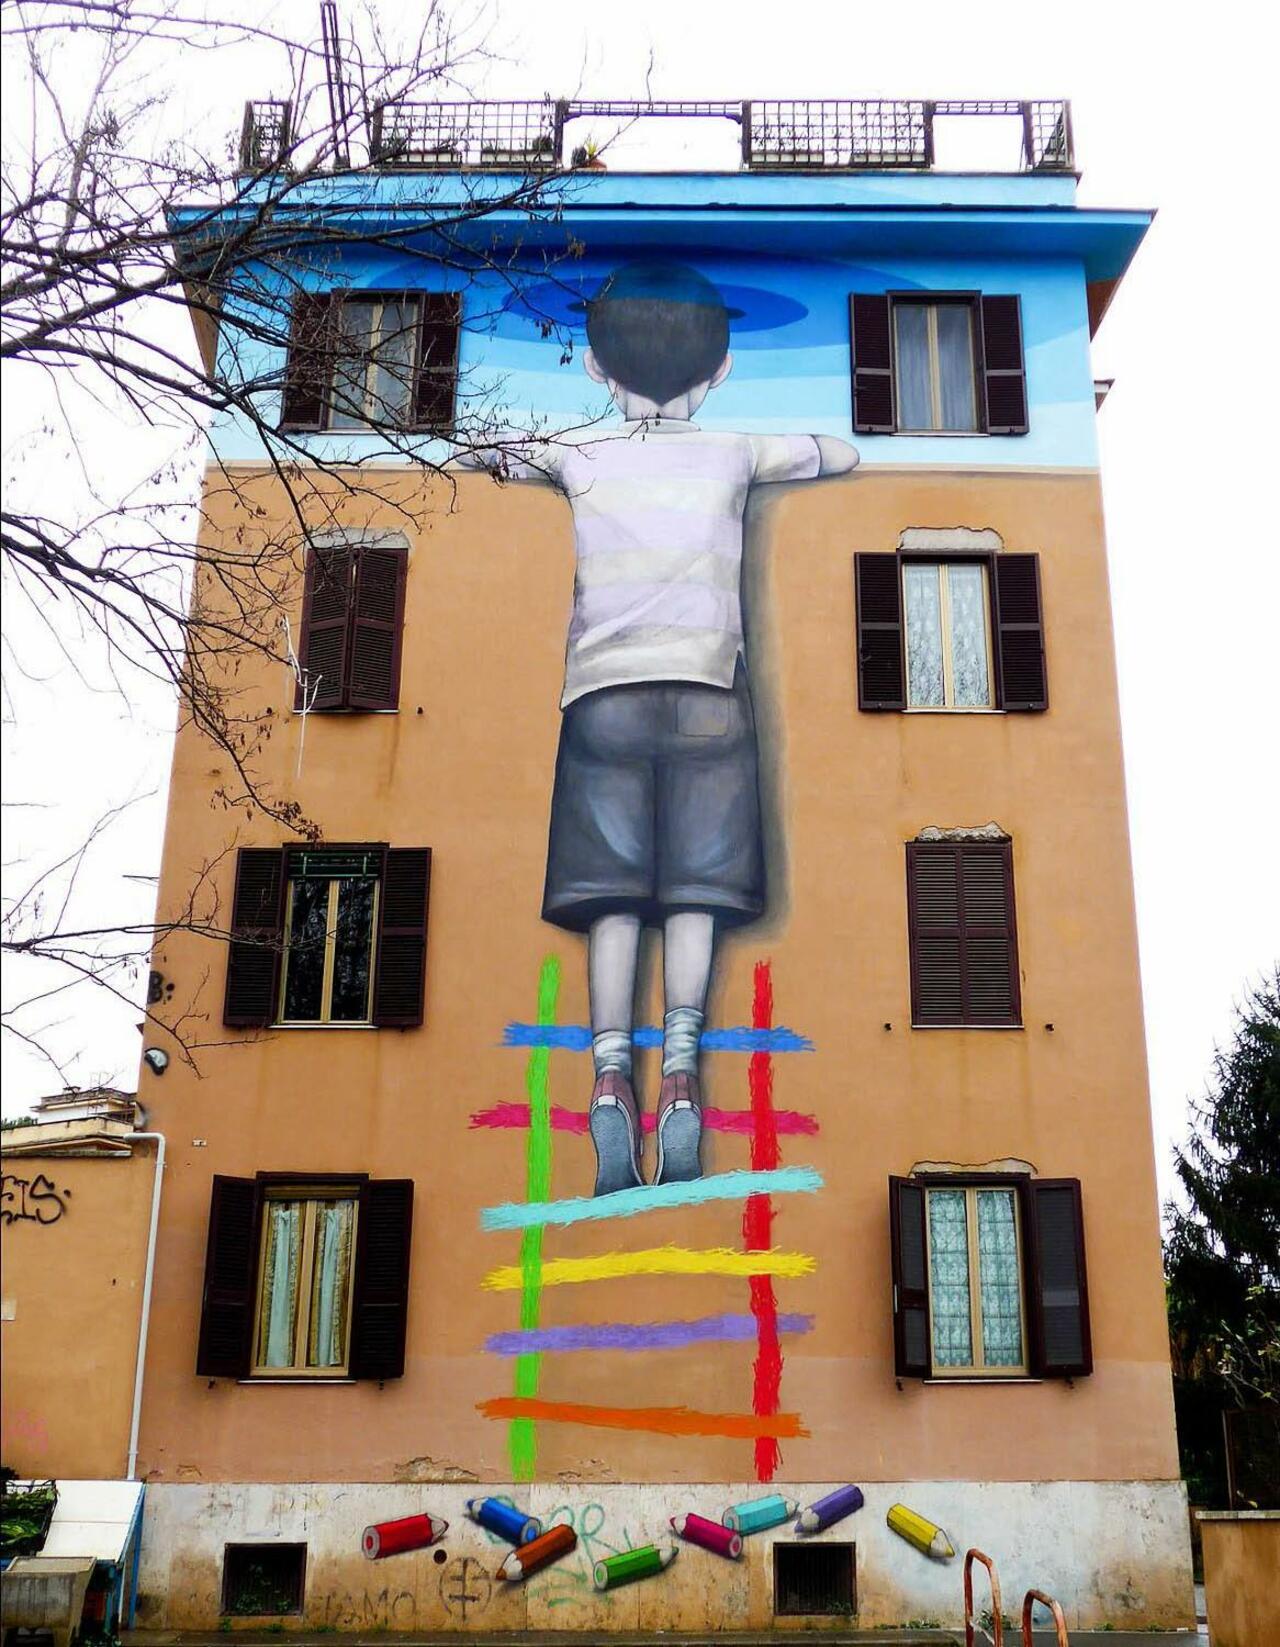 Streetart by Seth Globepainter in Rome, Italy

#streetart #urbanart #mural #art #graffiti http://t.co/wbCwhMeYgF